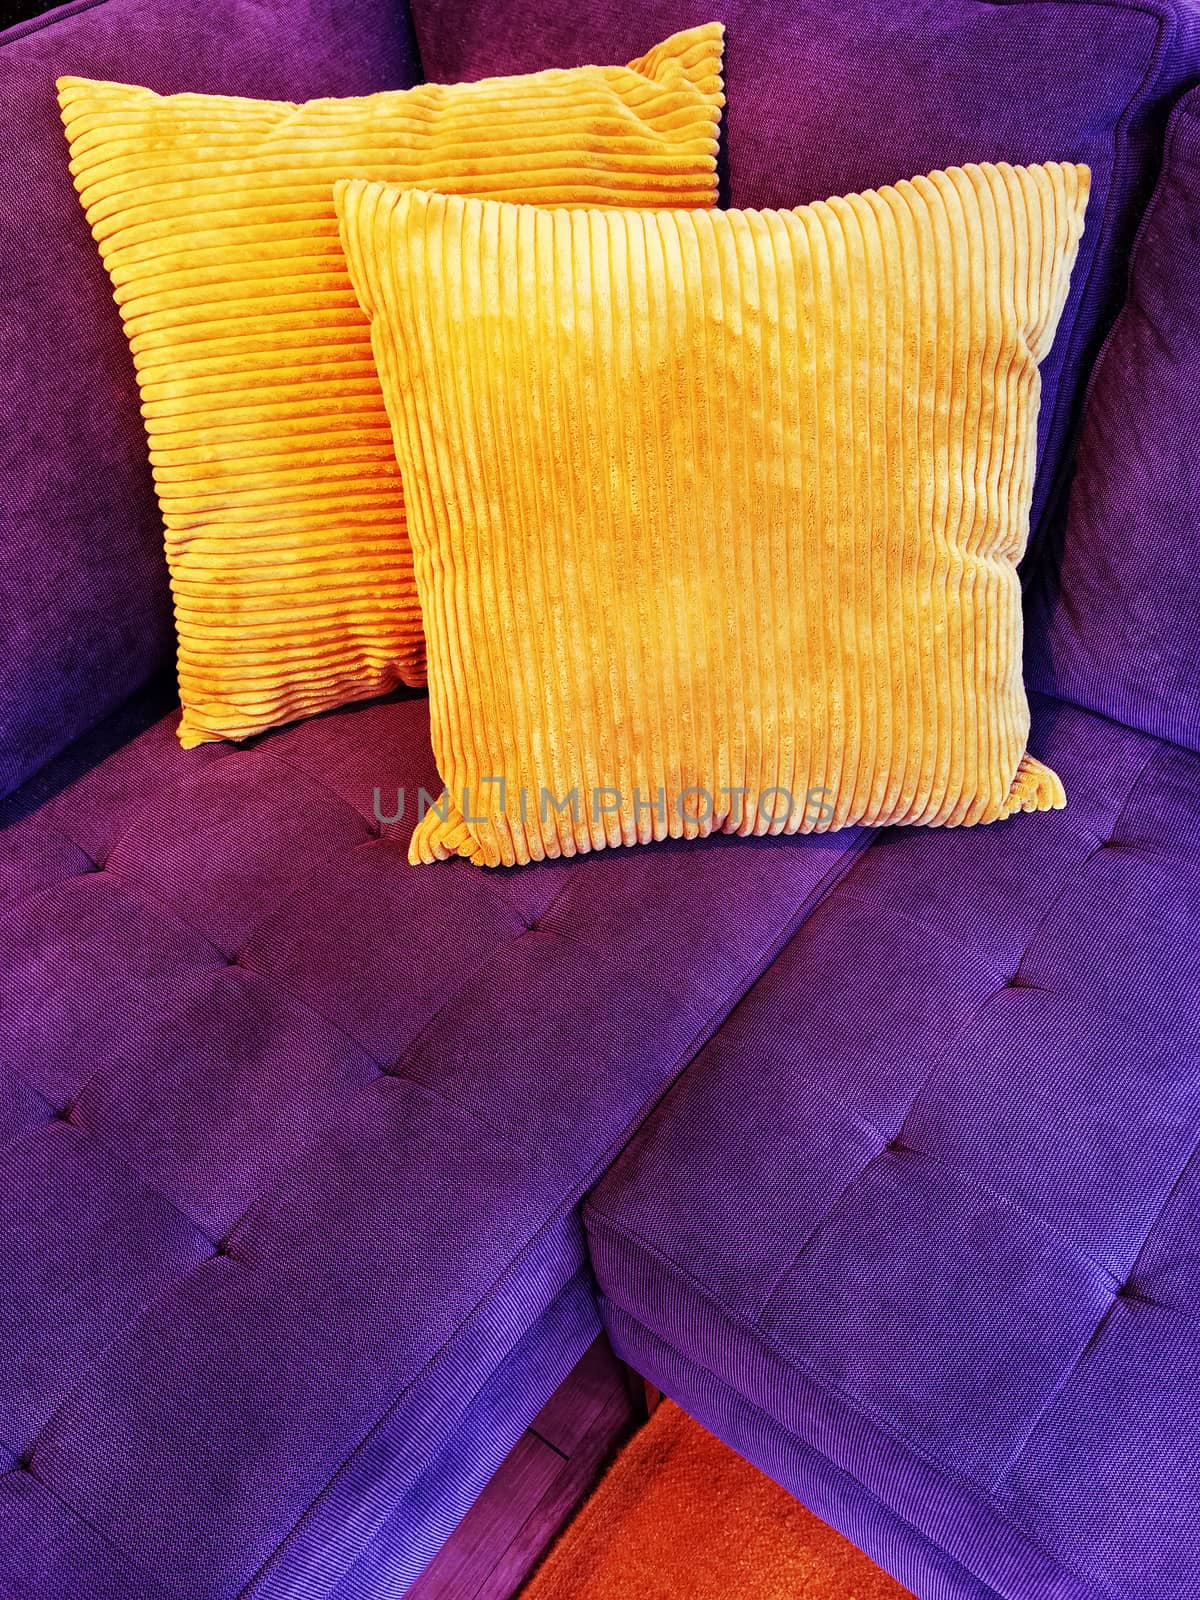 Vibrant purple sofa with orange cushions by anikasalsera